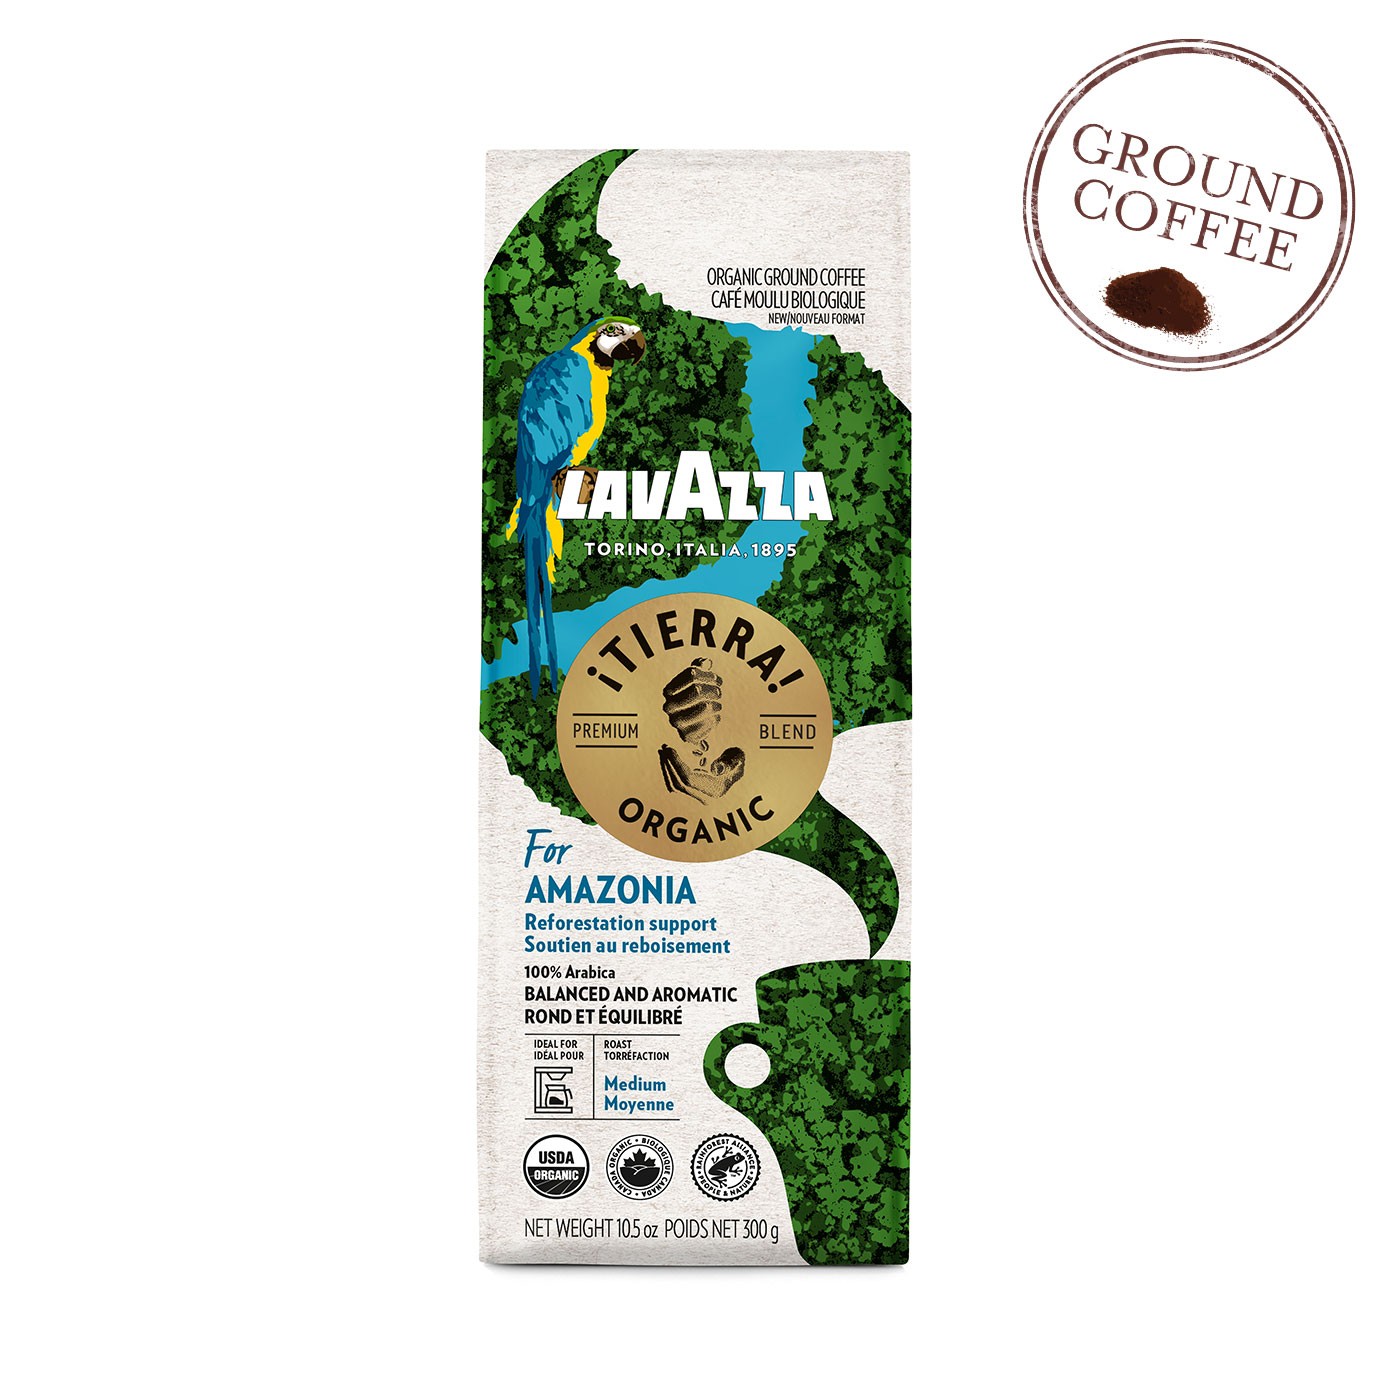 Organic ¡Tierra! Amazonia Ground Coffee 10.5 oz - Lavazza | Eataly.com